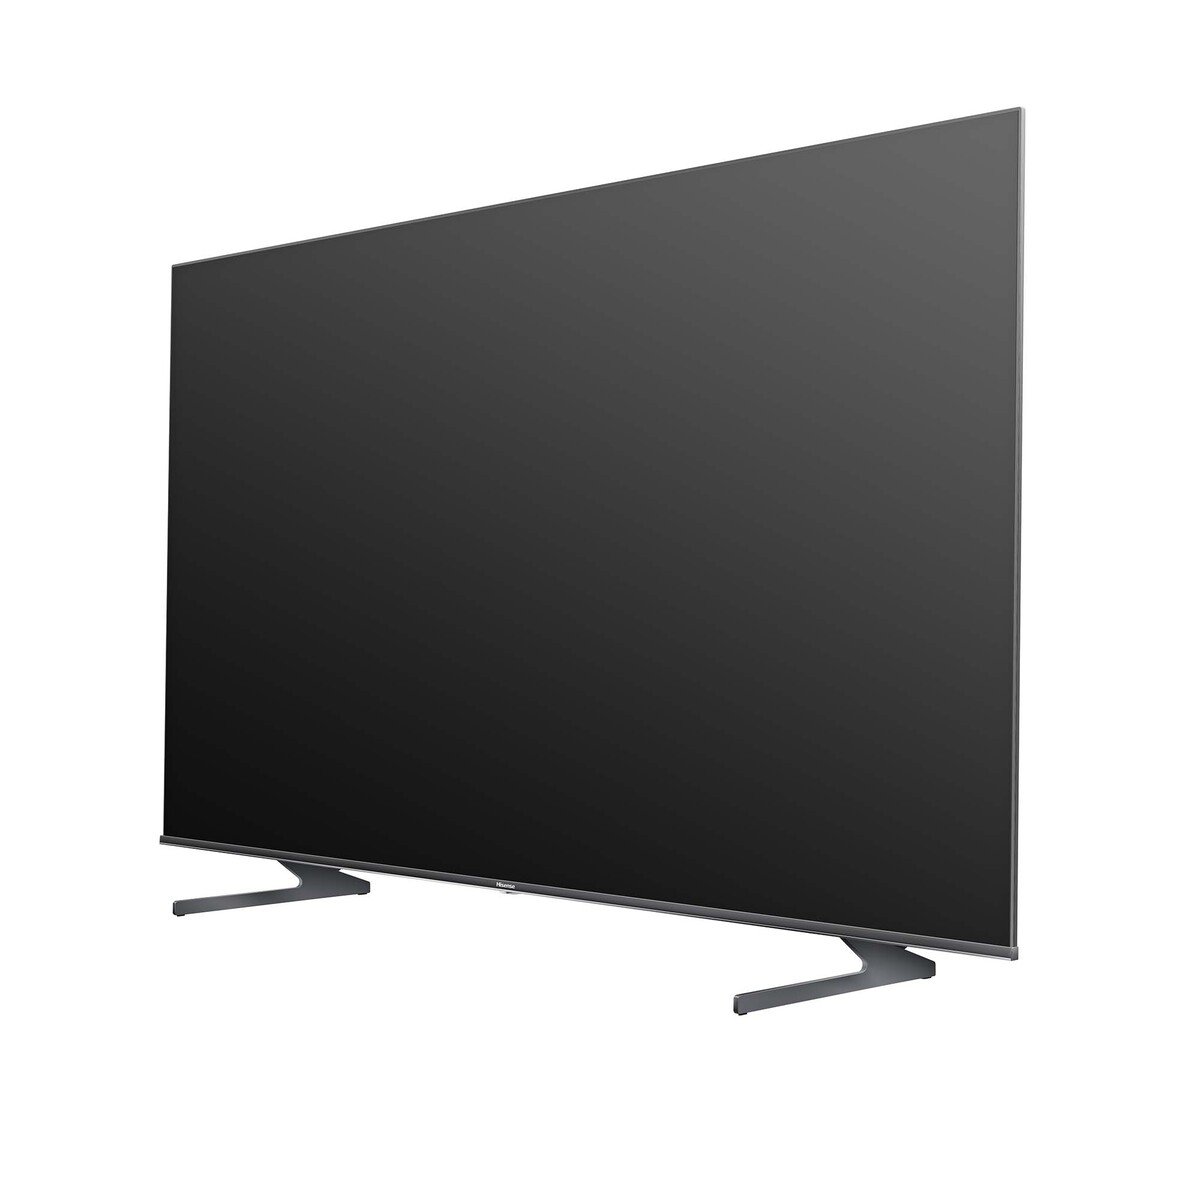 Hisense 75 inches 4K Smart ULED TV, Black, 75U7HQ